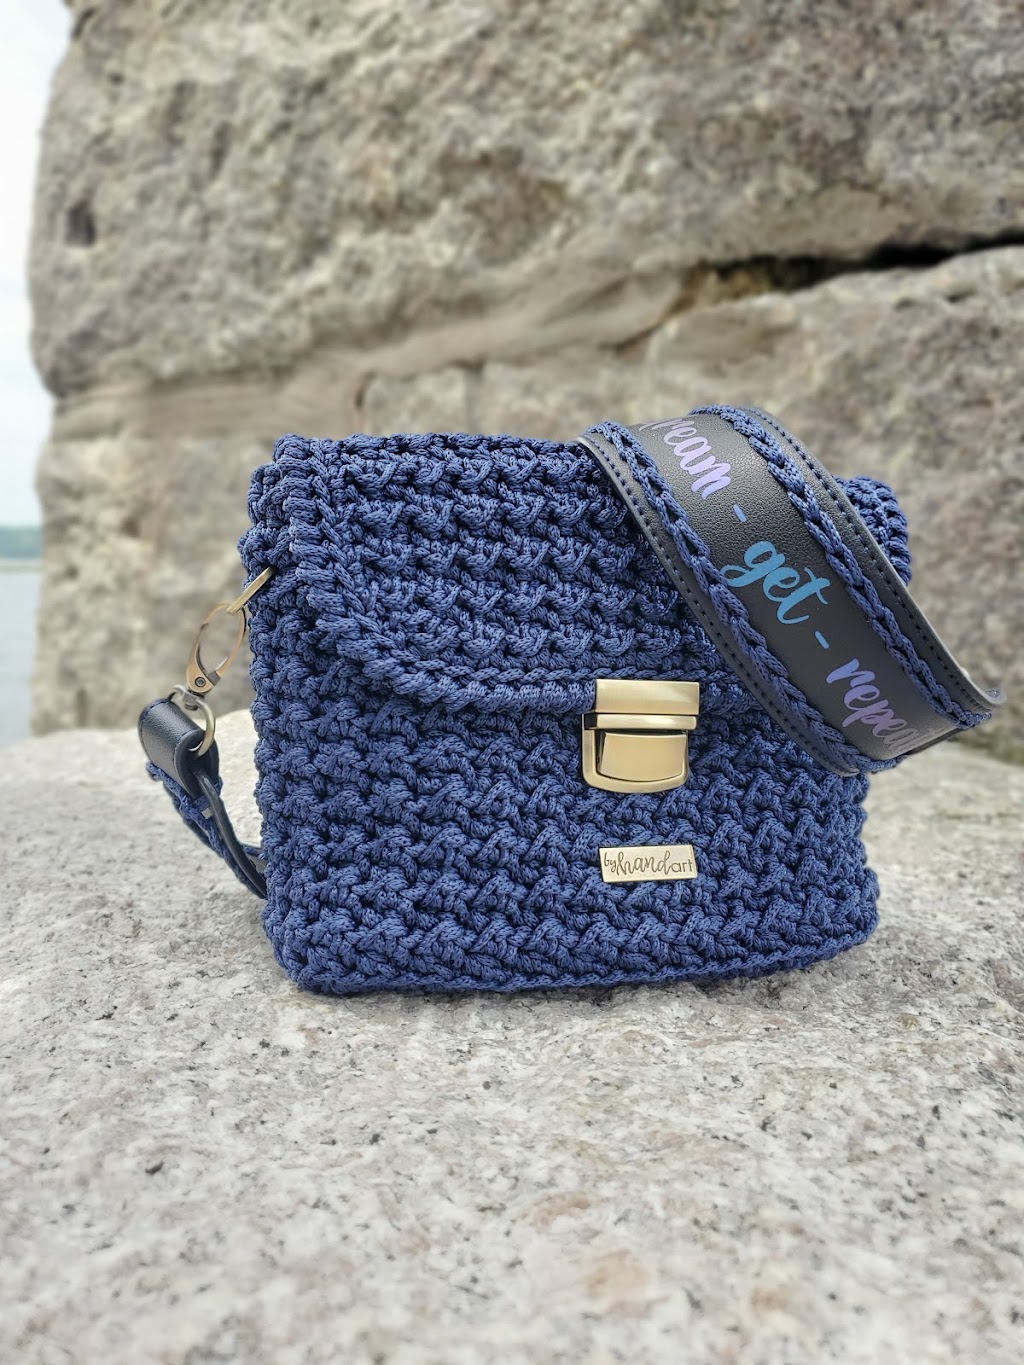 Byhandart | Handbags made by artisans | 14 Jackson St, Glen Cove, NY 11542 | Phone: (516) 303-5473